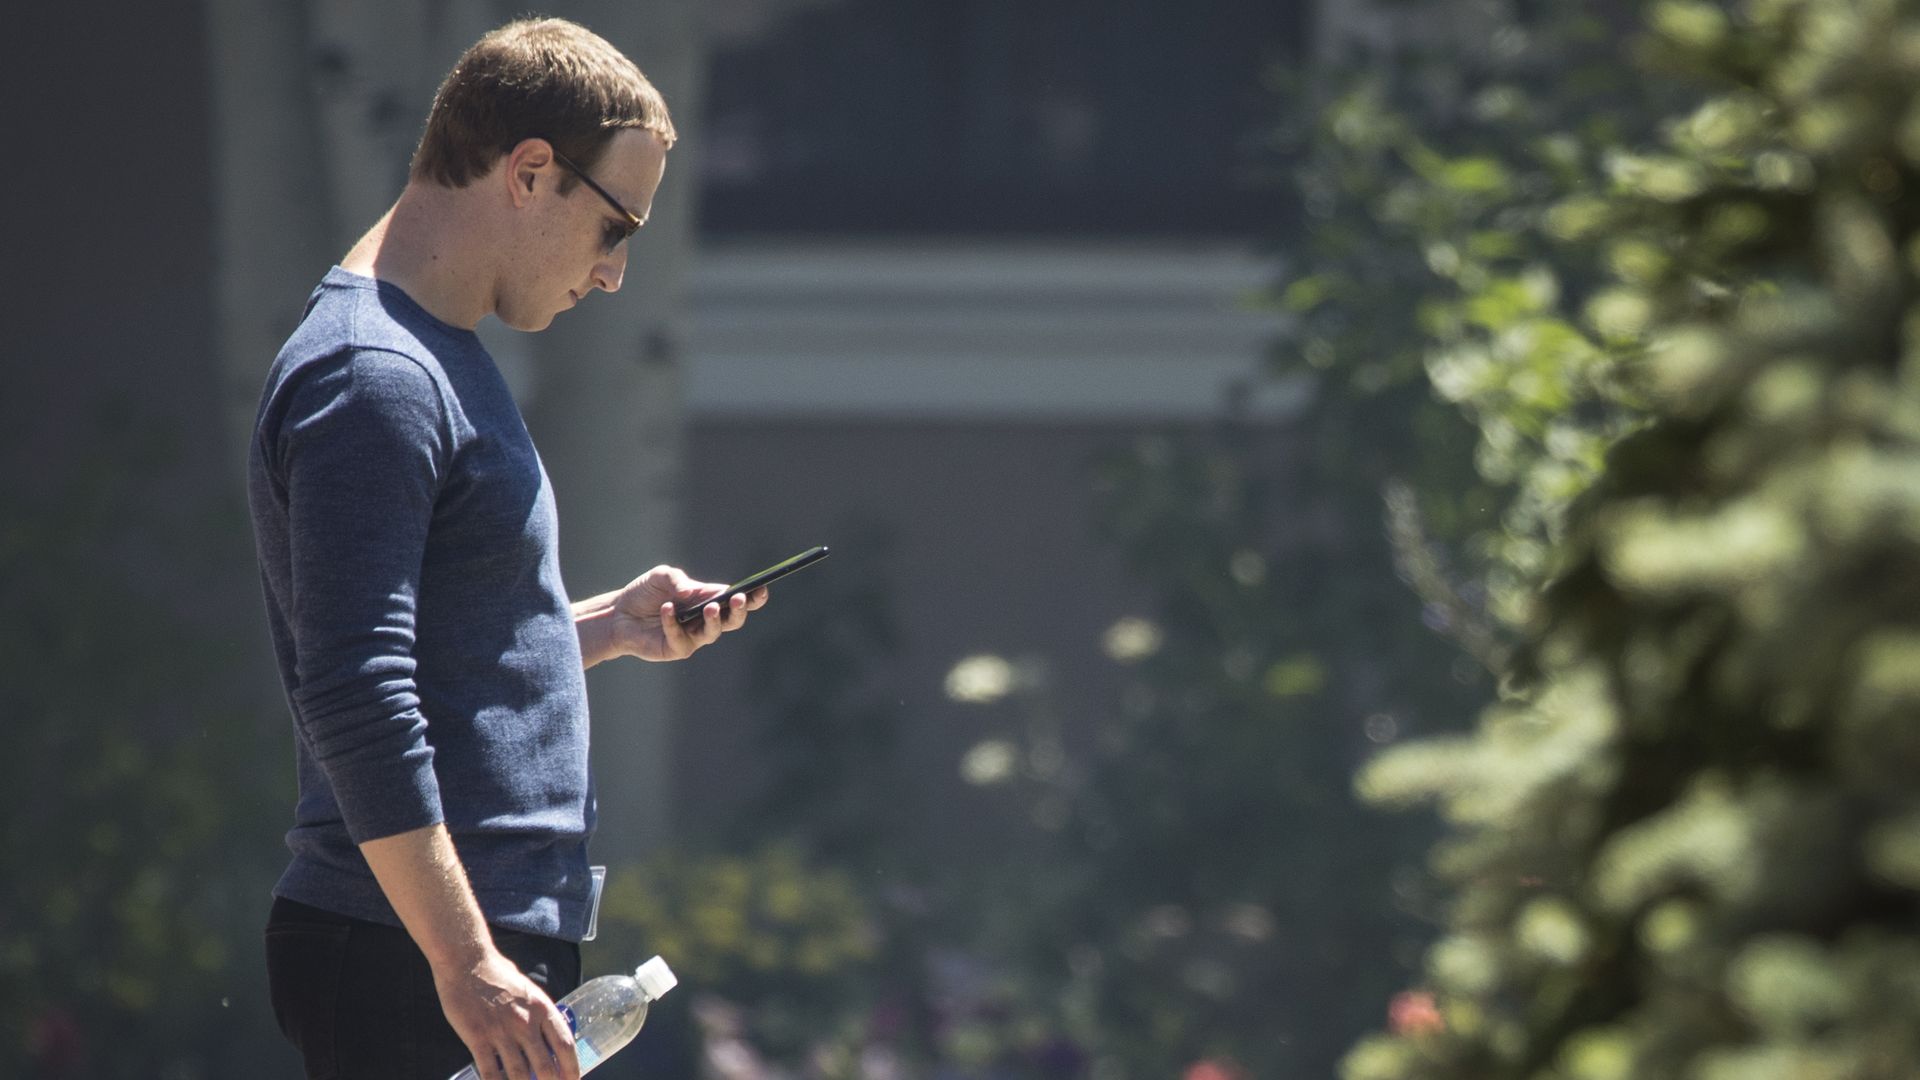 Mark zuckerberg looks at his phone outside